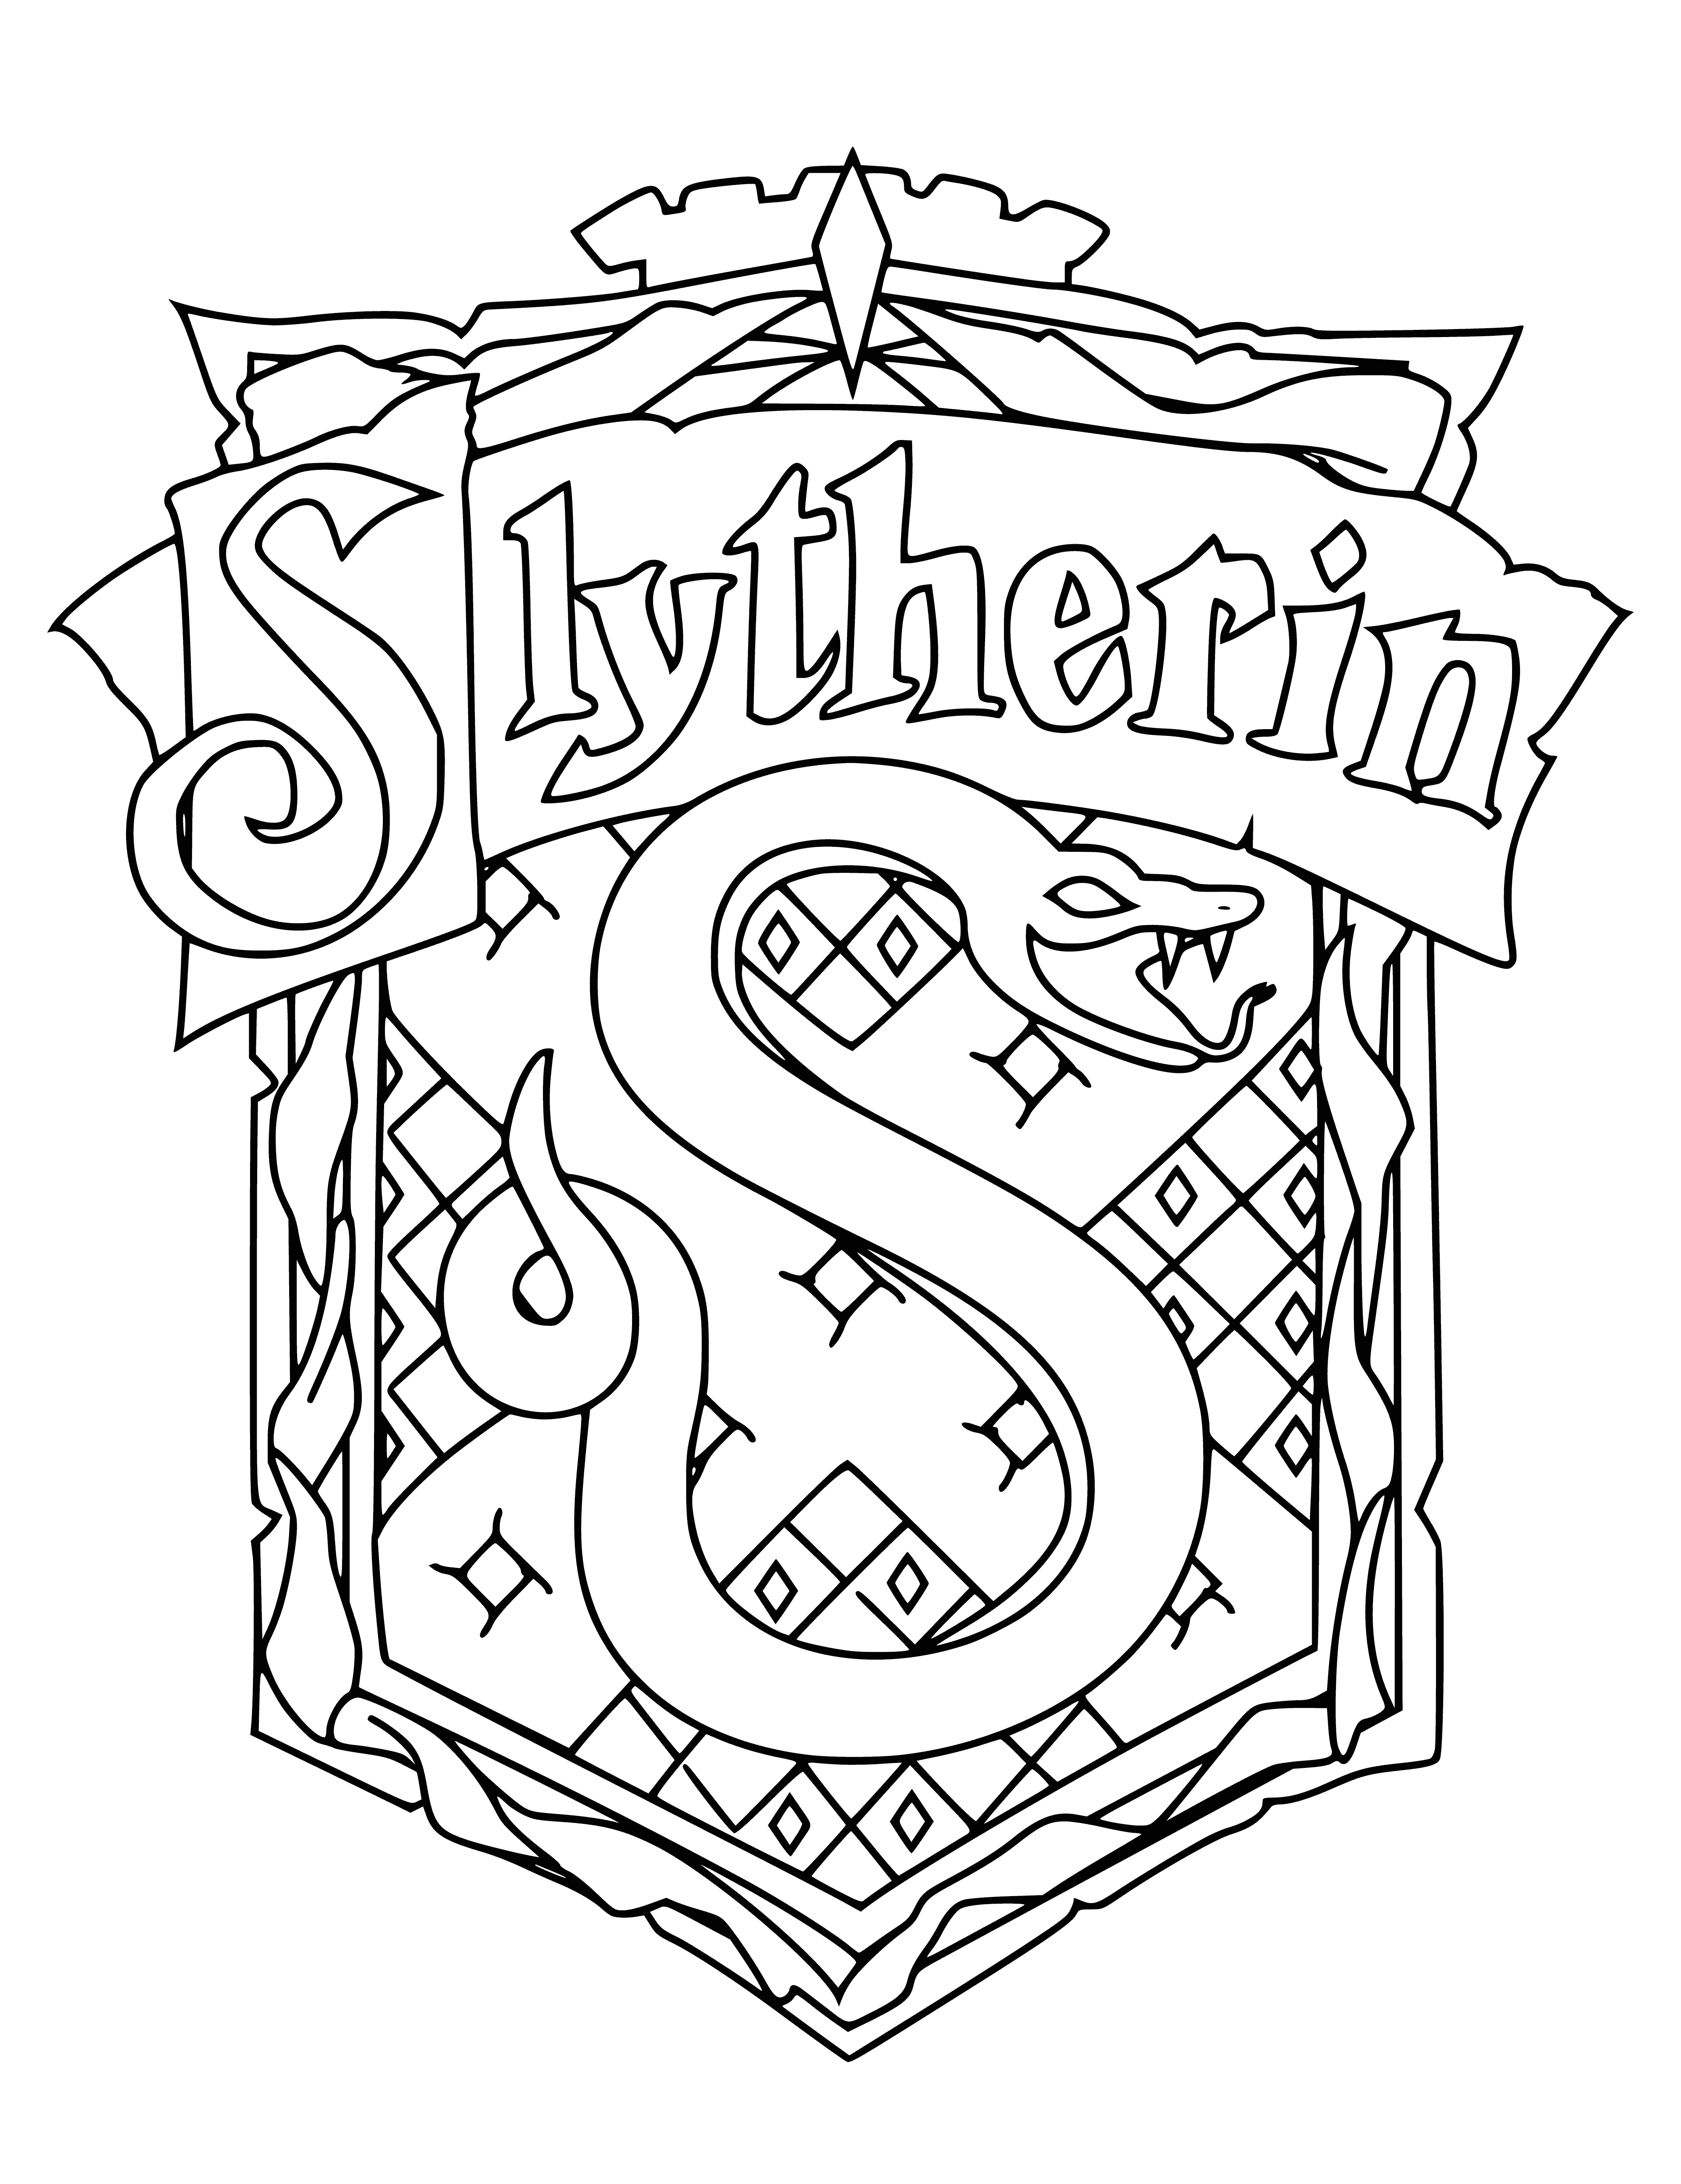 Slytherin House Crest inkleurbladsy